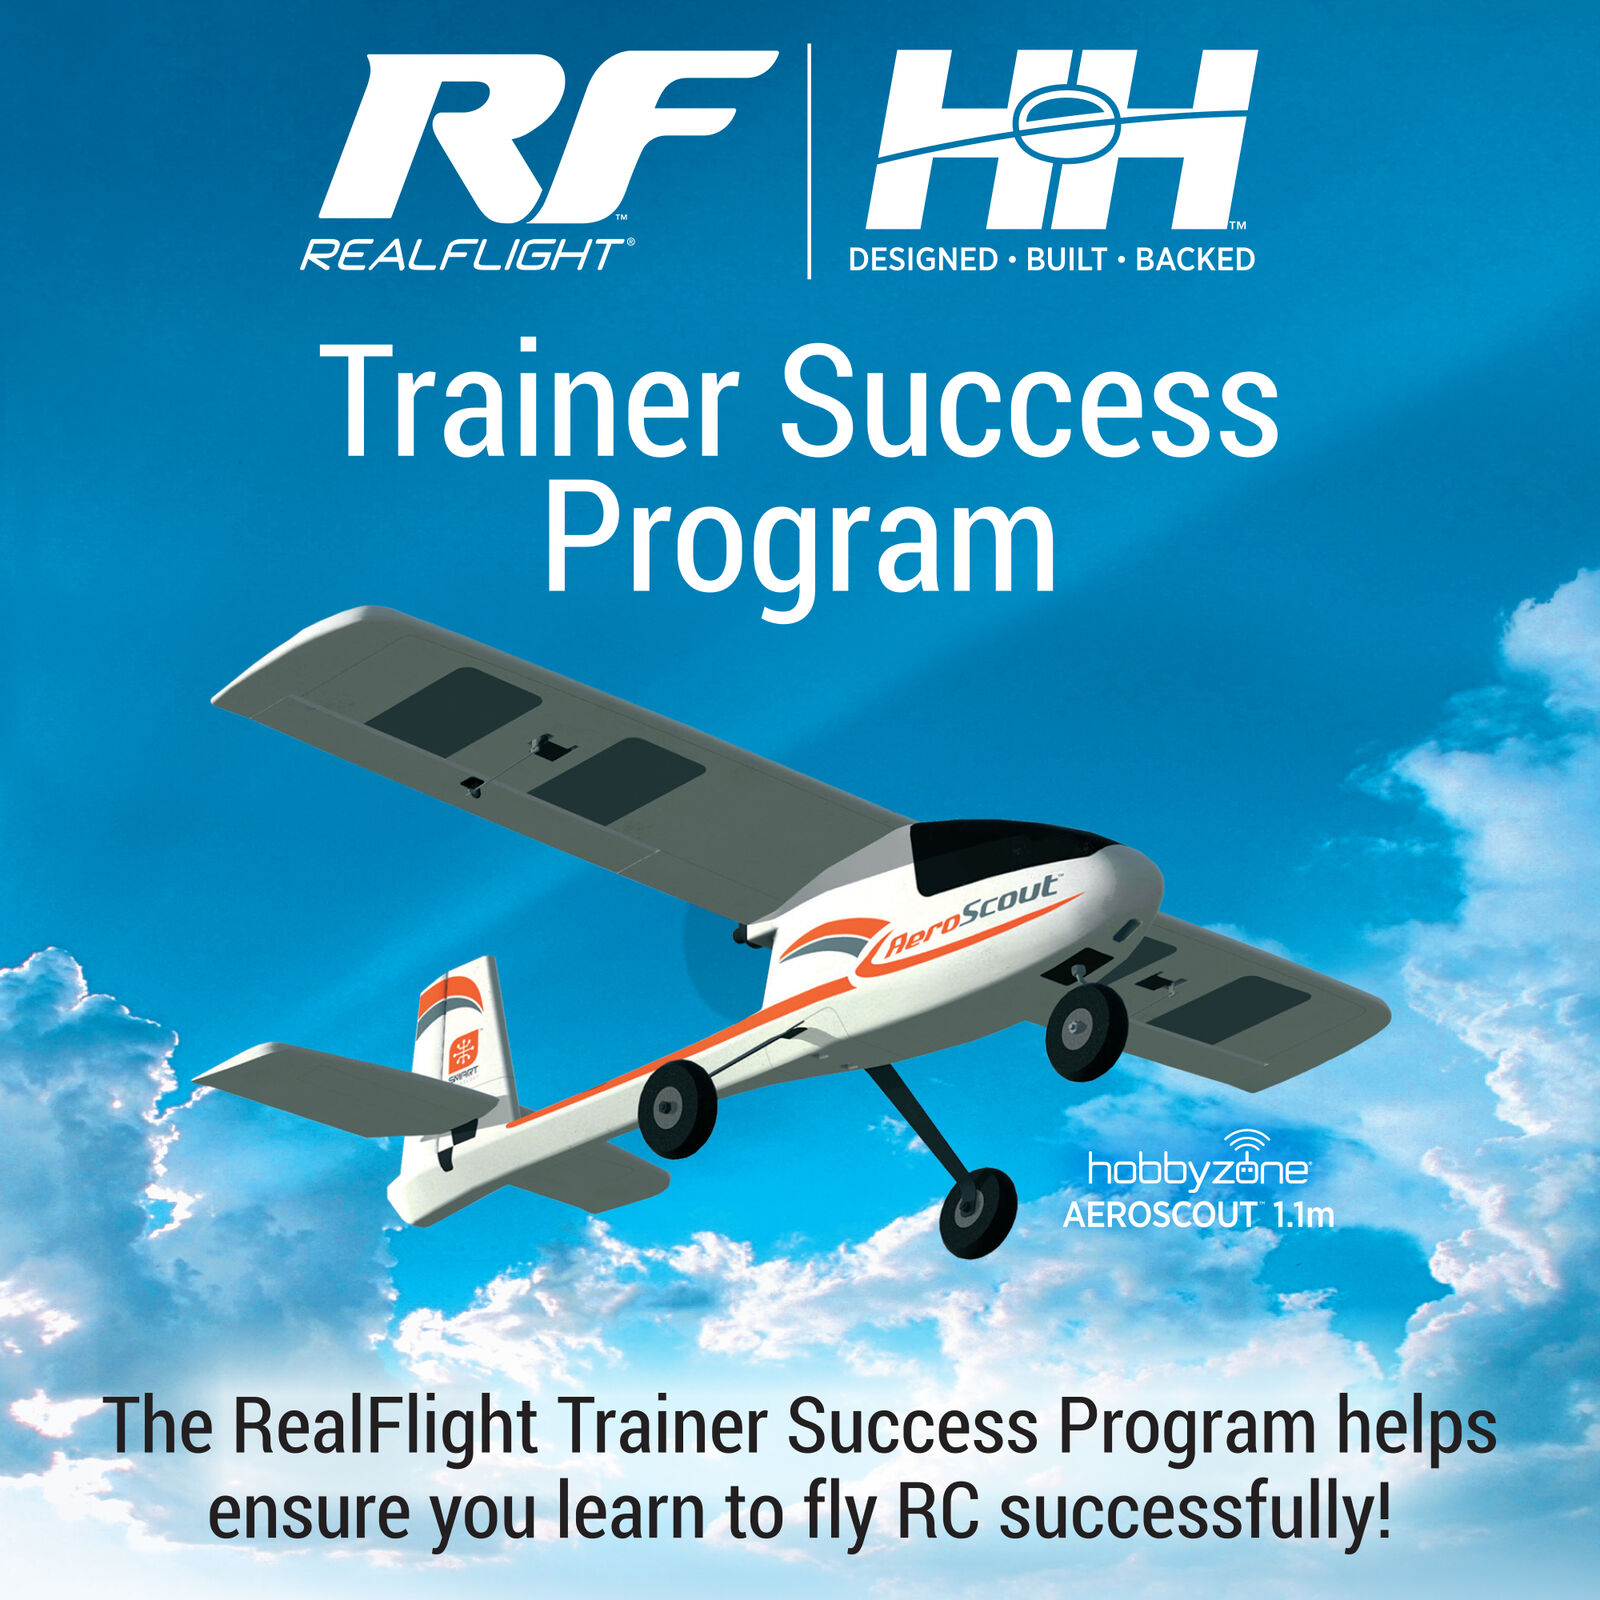 RealFlight Trainer Success Program, AeroScout 1.1m